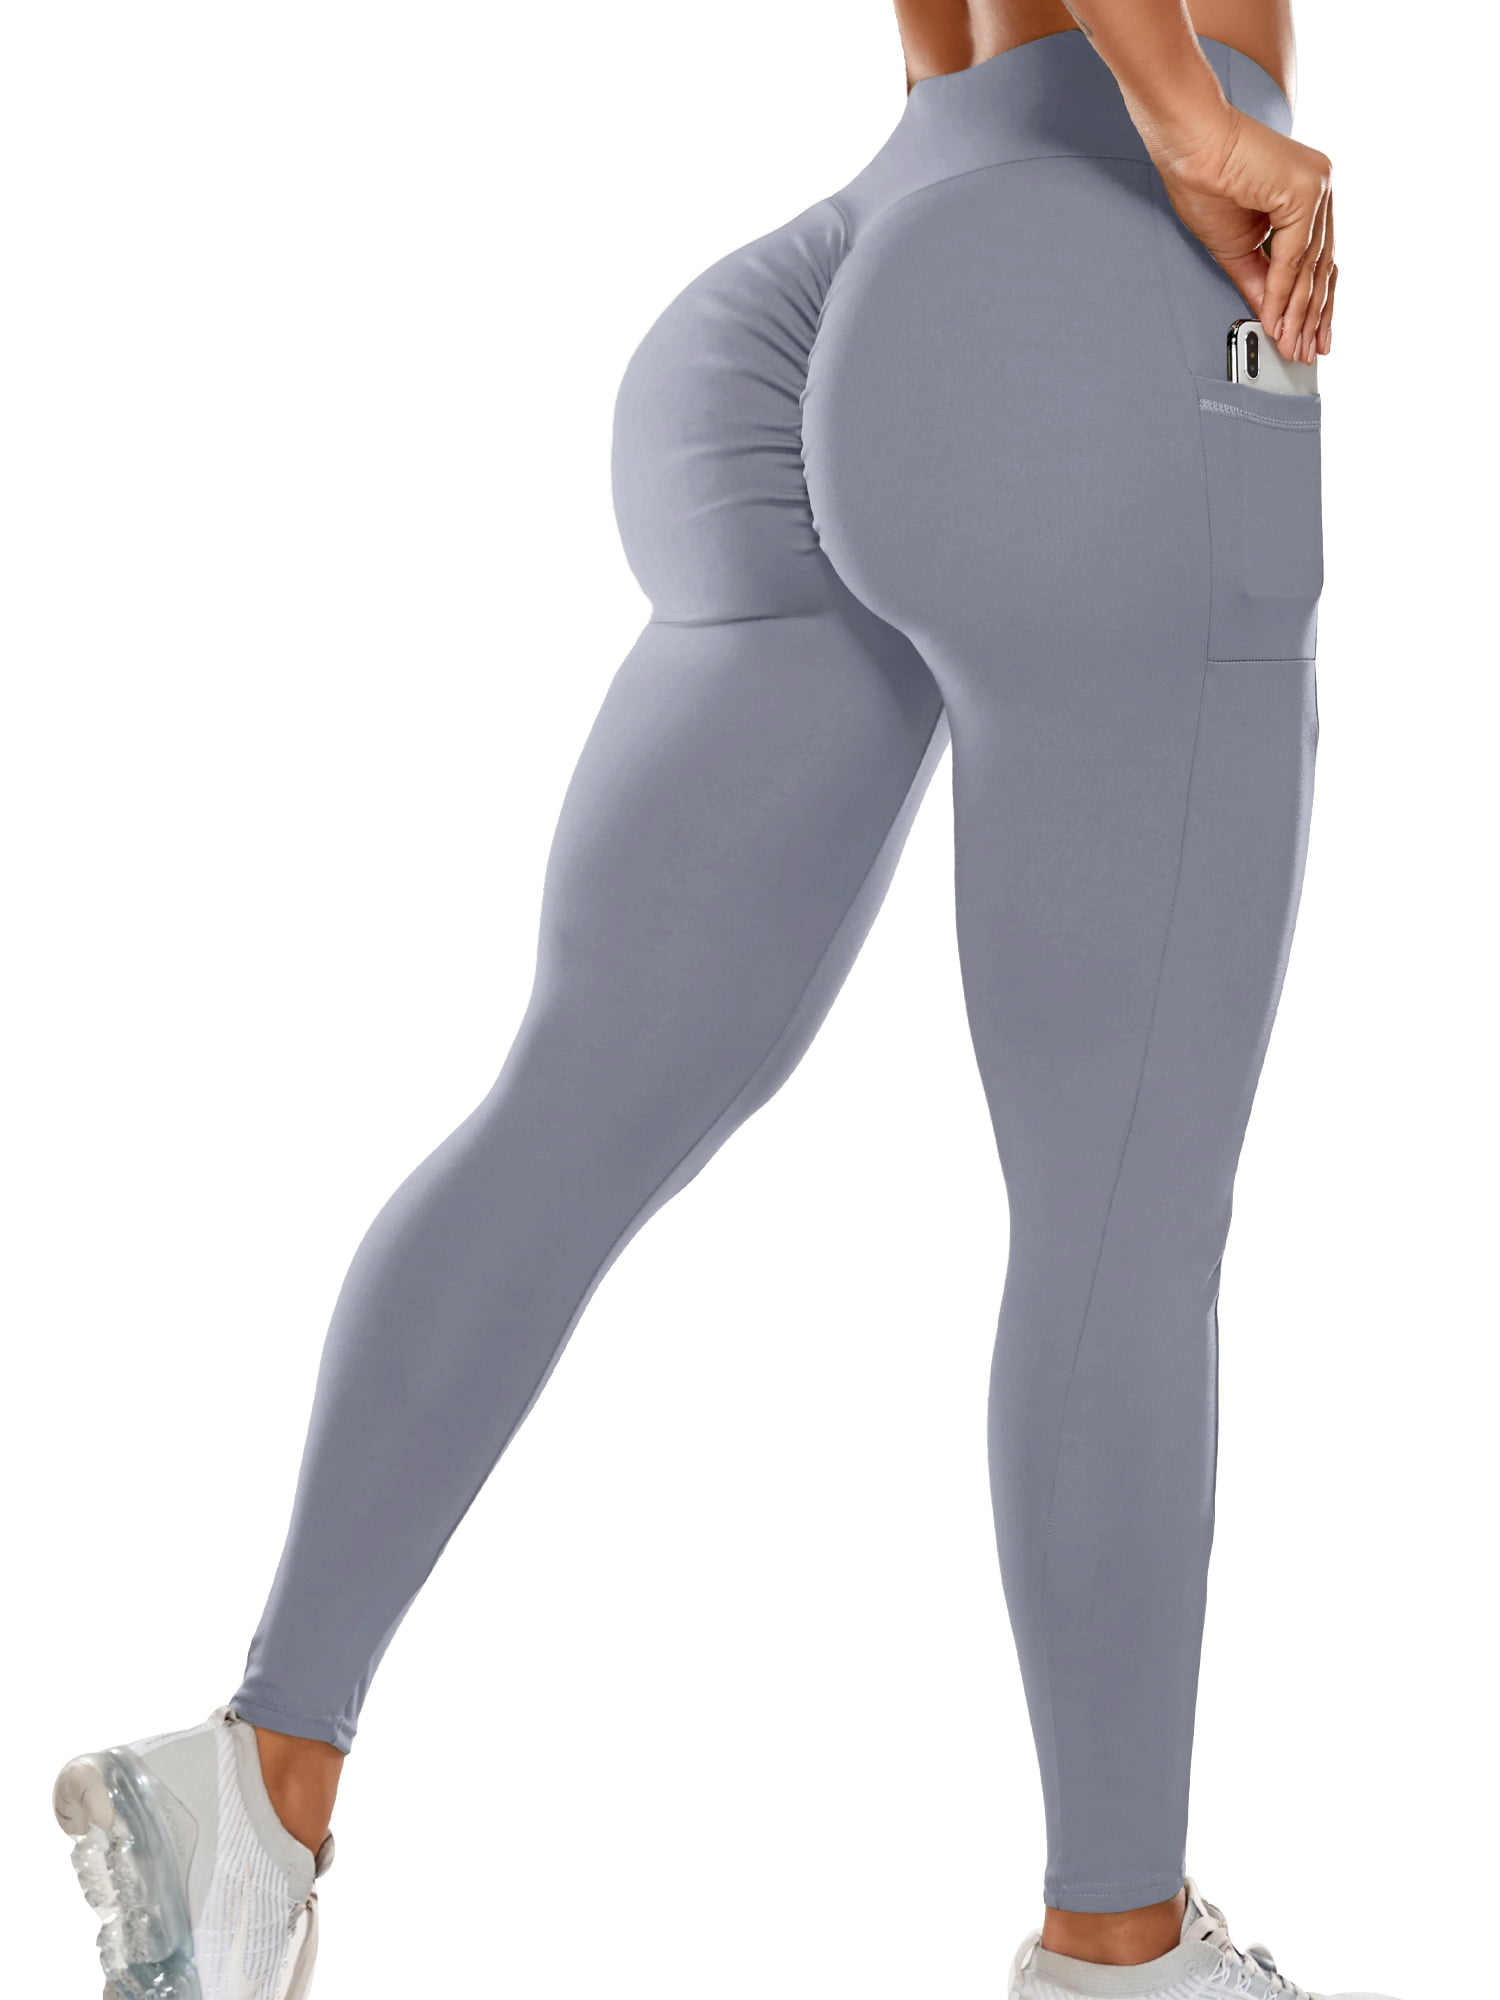 YOHOYOHA Plus Size Leggings High Waist Athletic Workout Yoga Pants